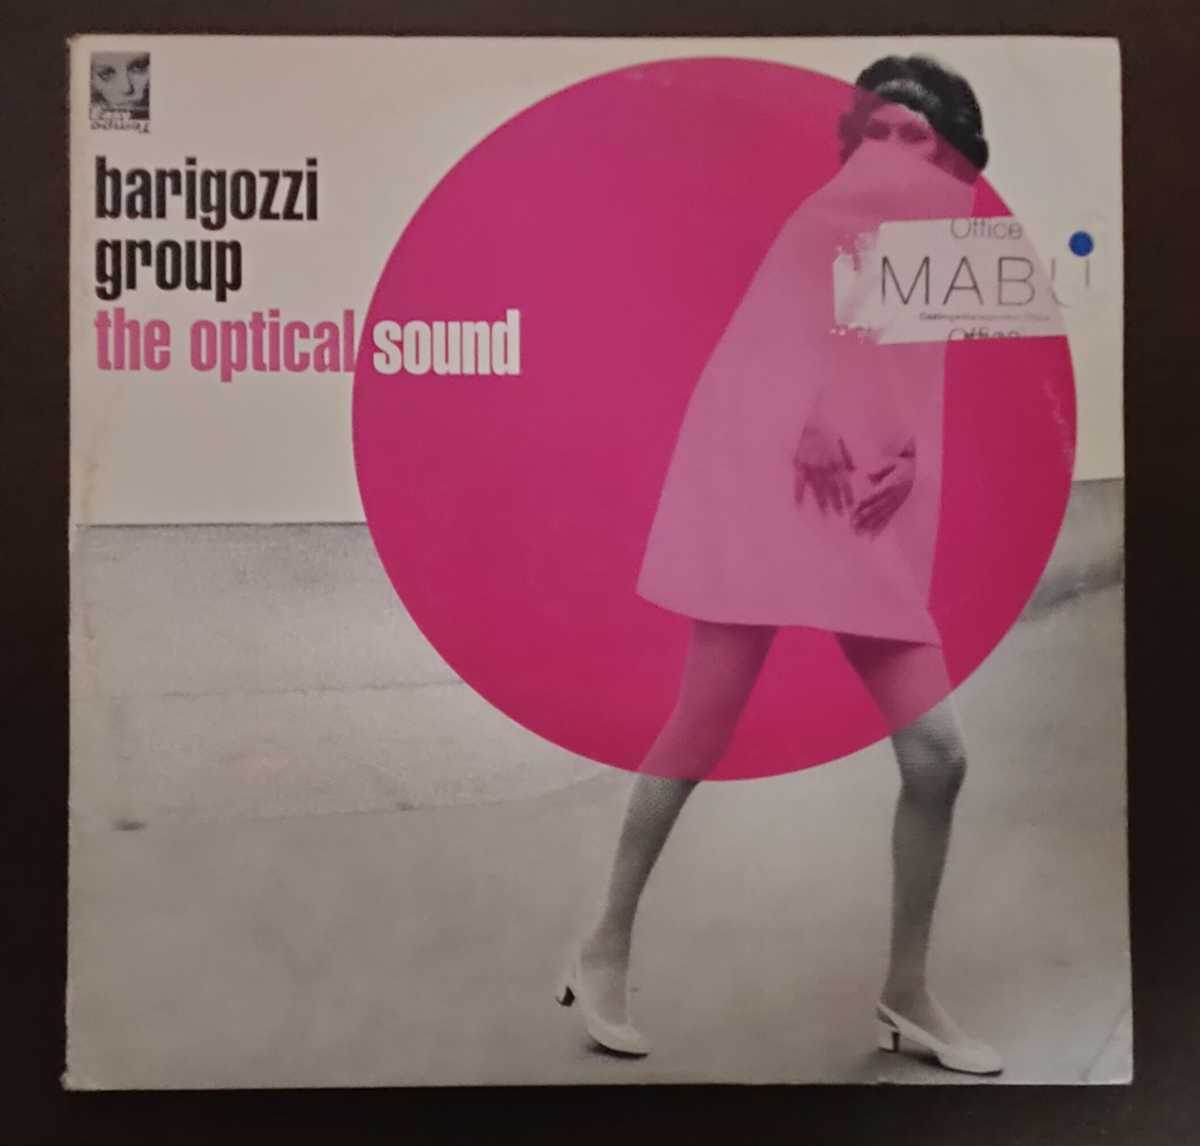 Jazz Bossa jazz funk 2枚組 Bargozzi group the optical sound レコードの画像1